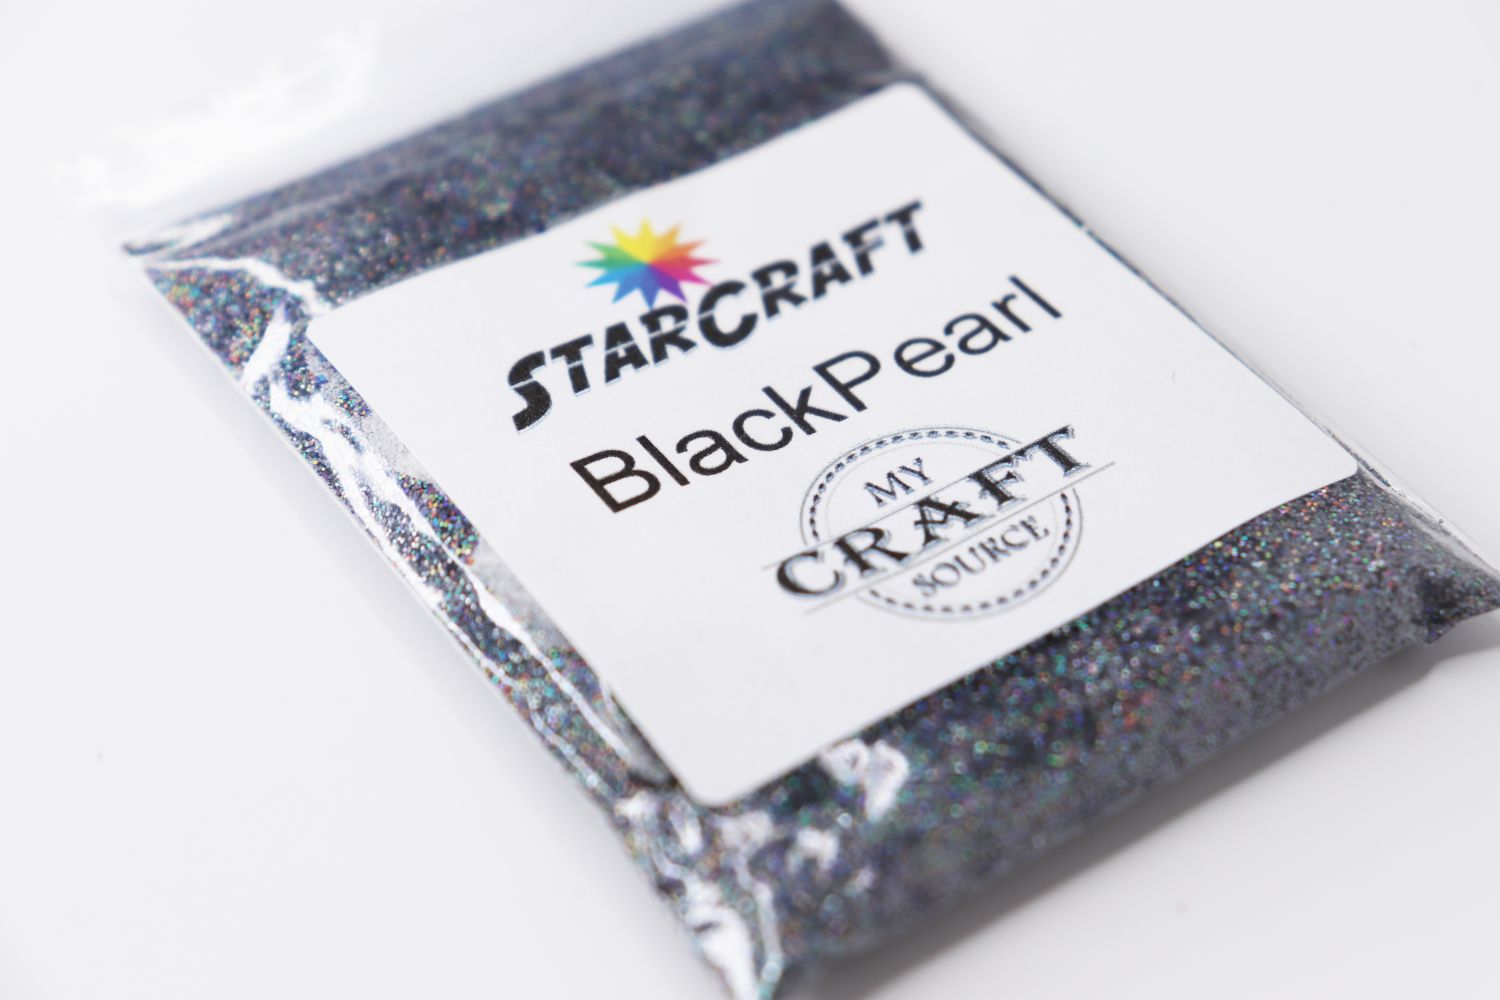 StarCraft Holographic Glitter - Black Pearl - 0.5 oz